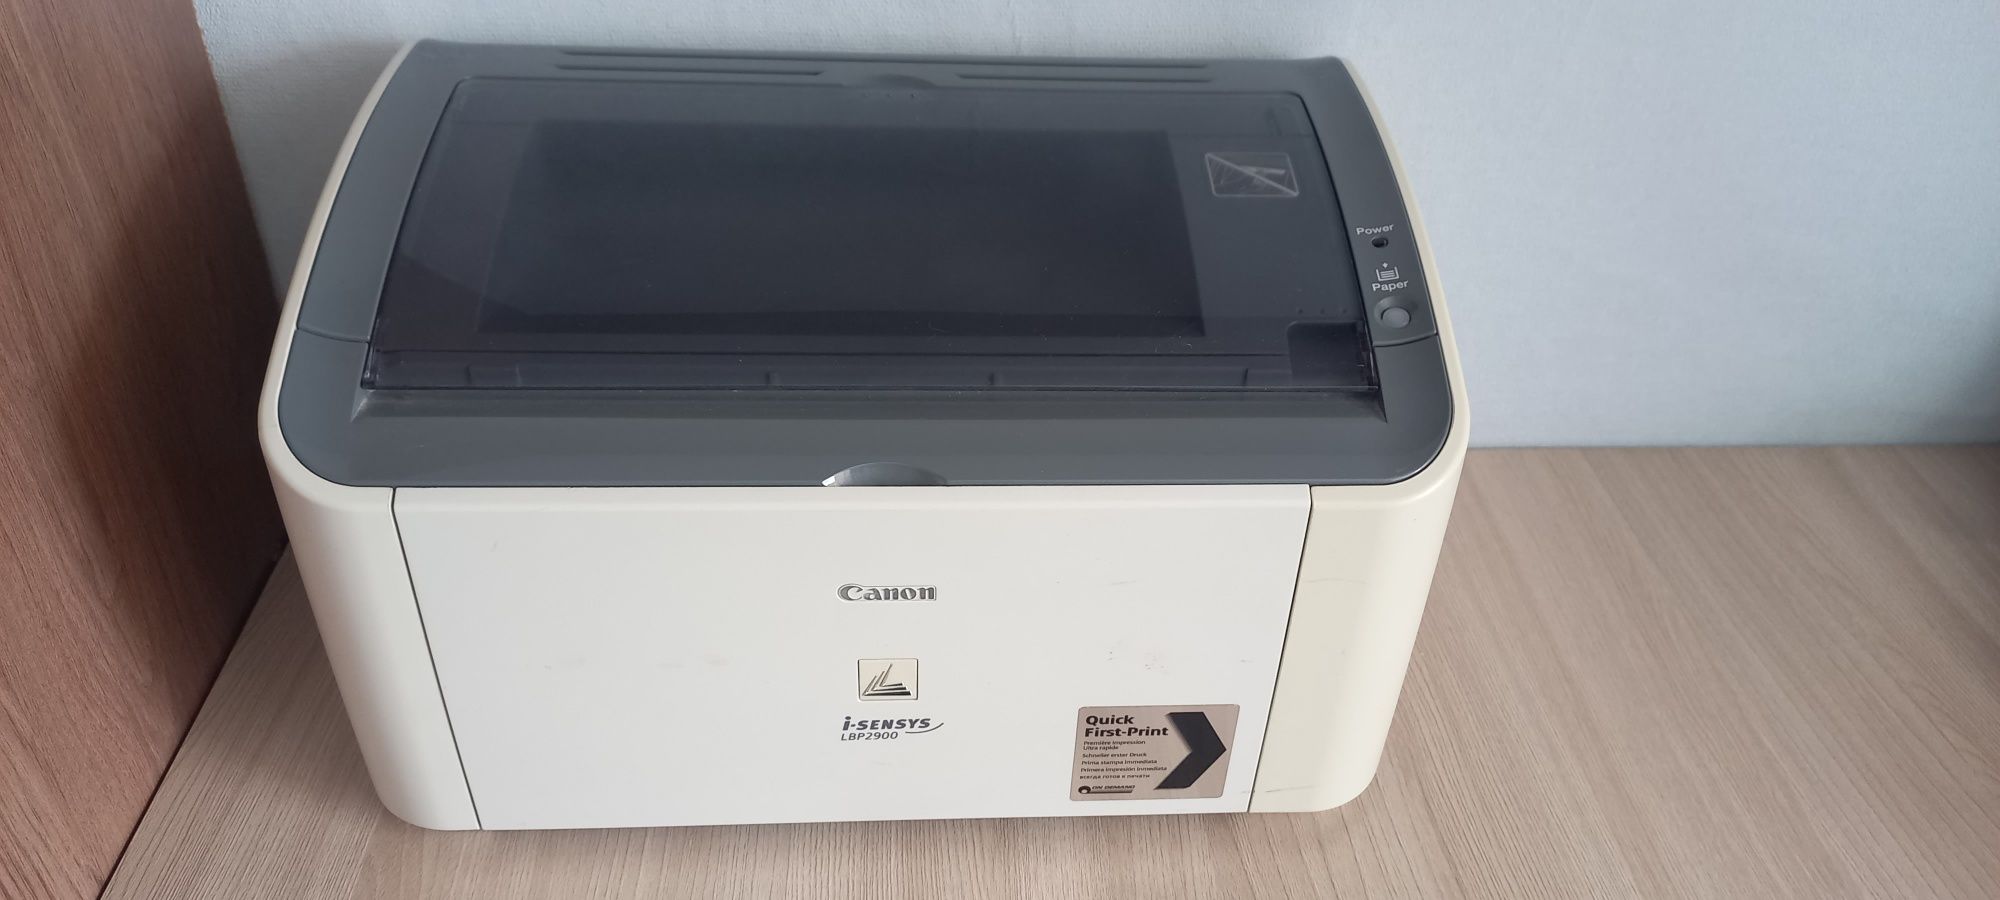 Принтер Canon i-sensys lbp 2900